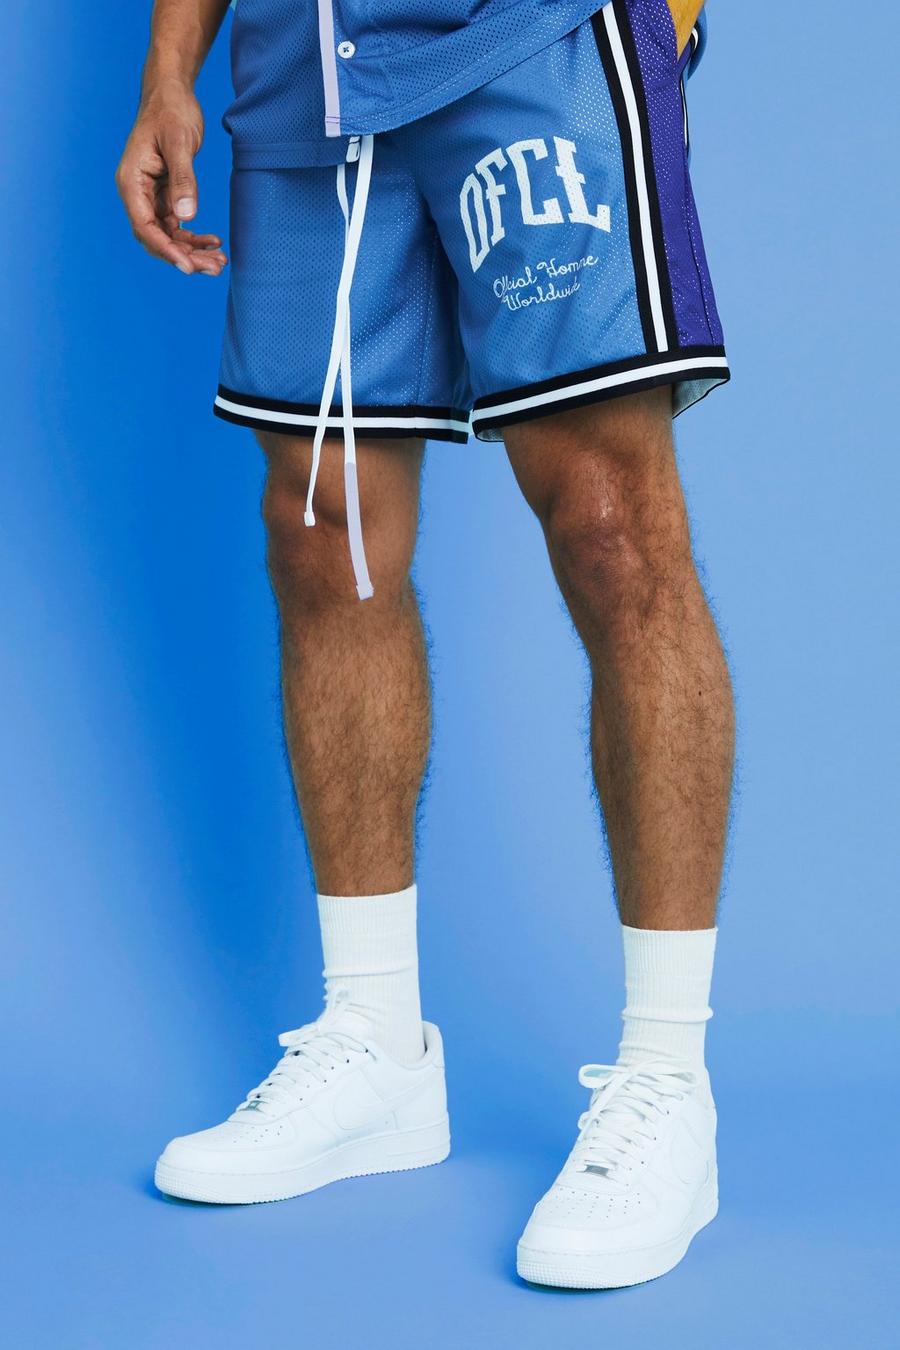 Pantalón corto Ofcl de malla estilo baloncesto, Light blue azzurro